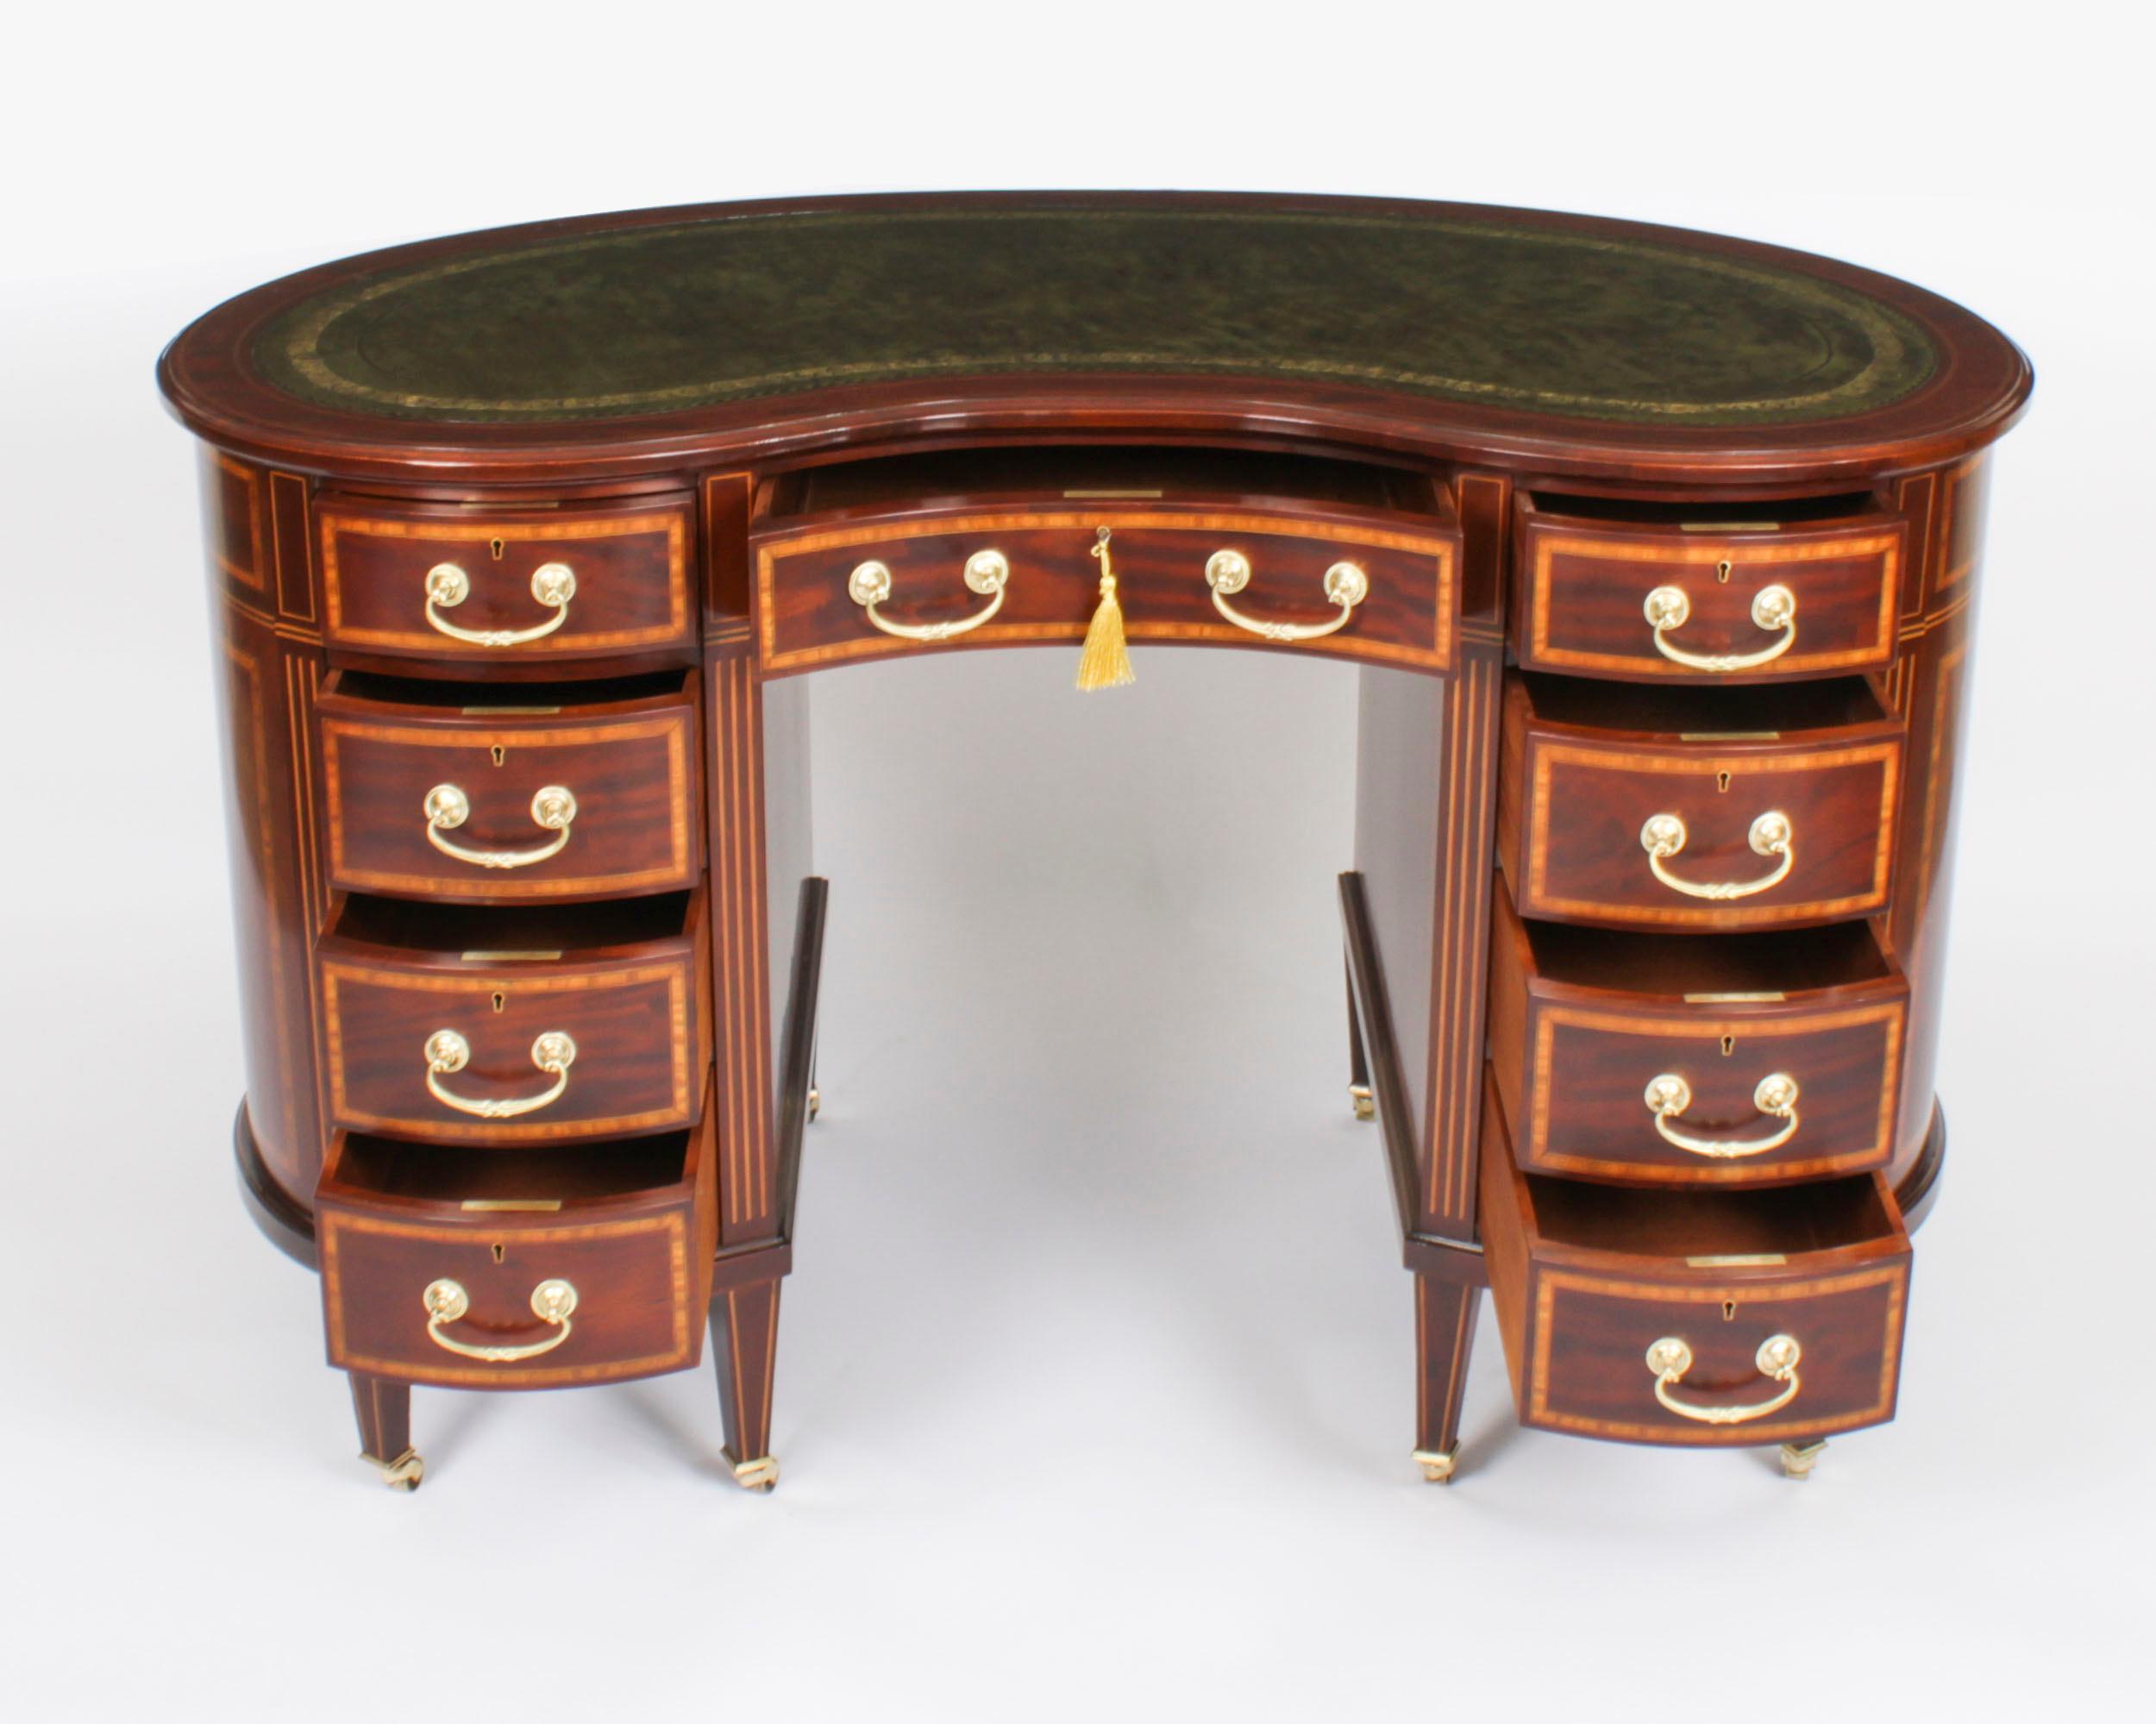 Antique Victorian Mahogany Inlaid Kidney Desk C1880 19th Century For Sale 2